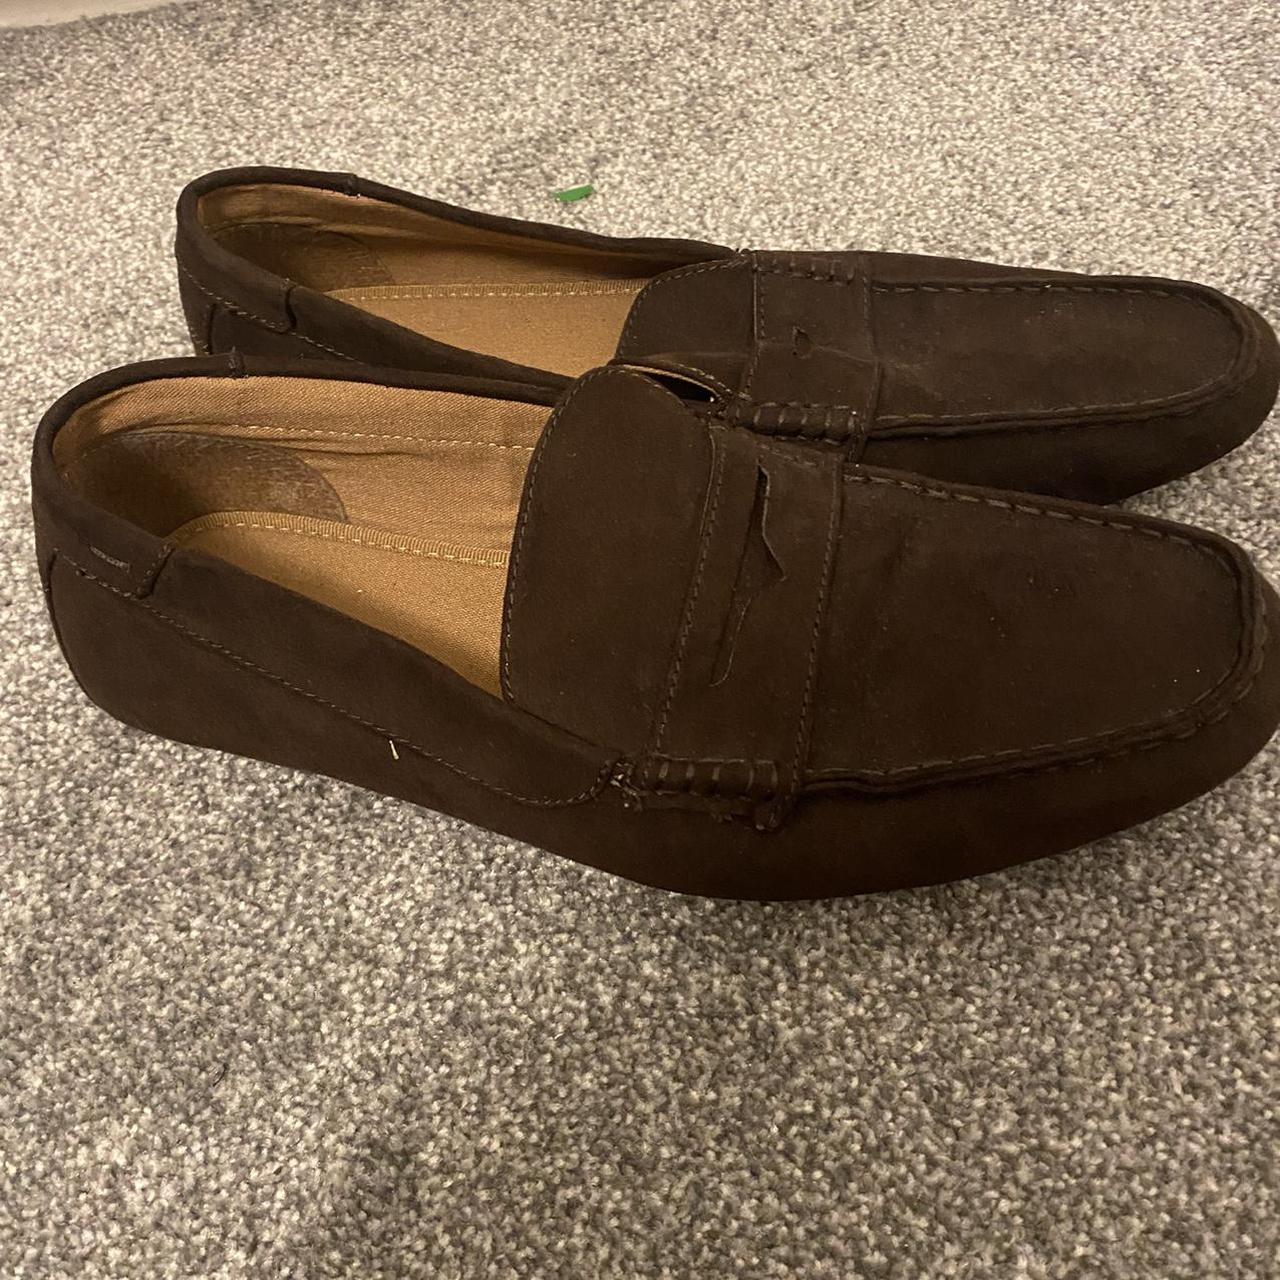 H&M Men’s loafer shoes. Only worn once. #Shoes... - Depop